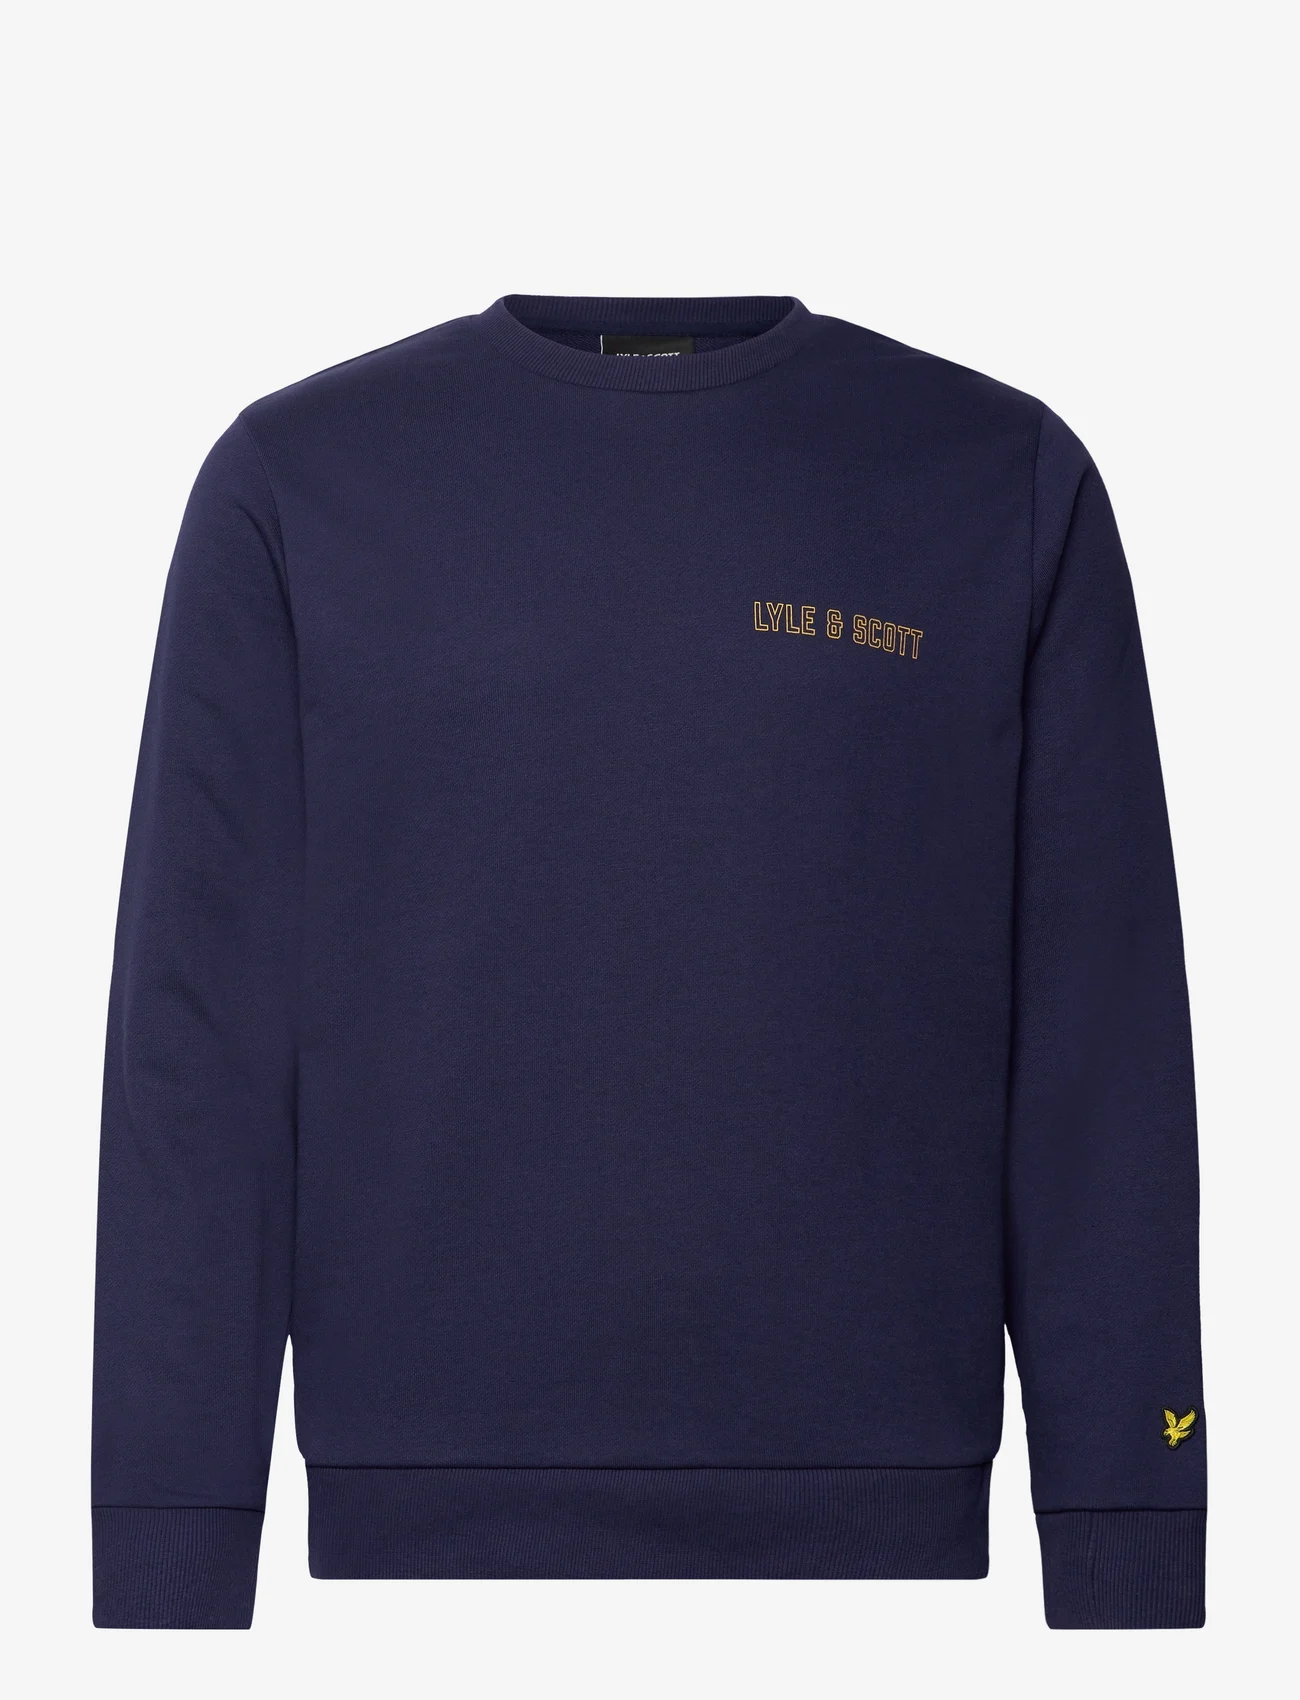 Lyle & Scott - Collegiate Sweatshirt - sweatshirts - z99 navy - 0